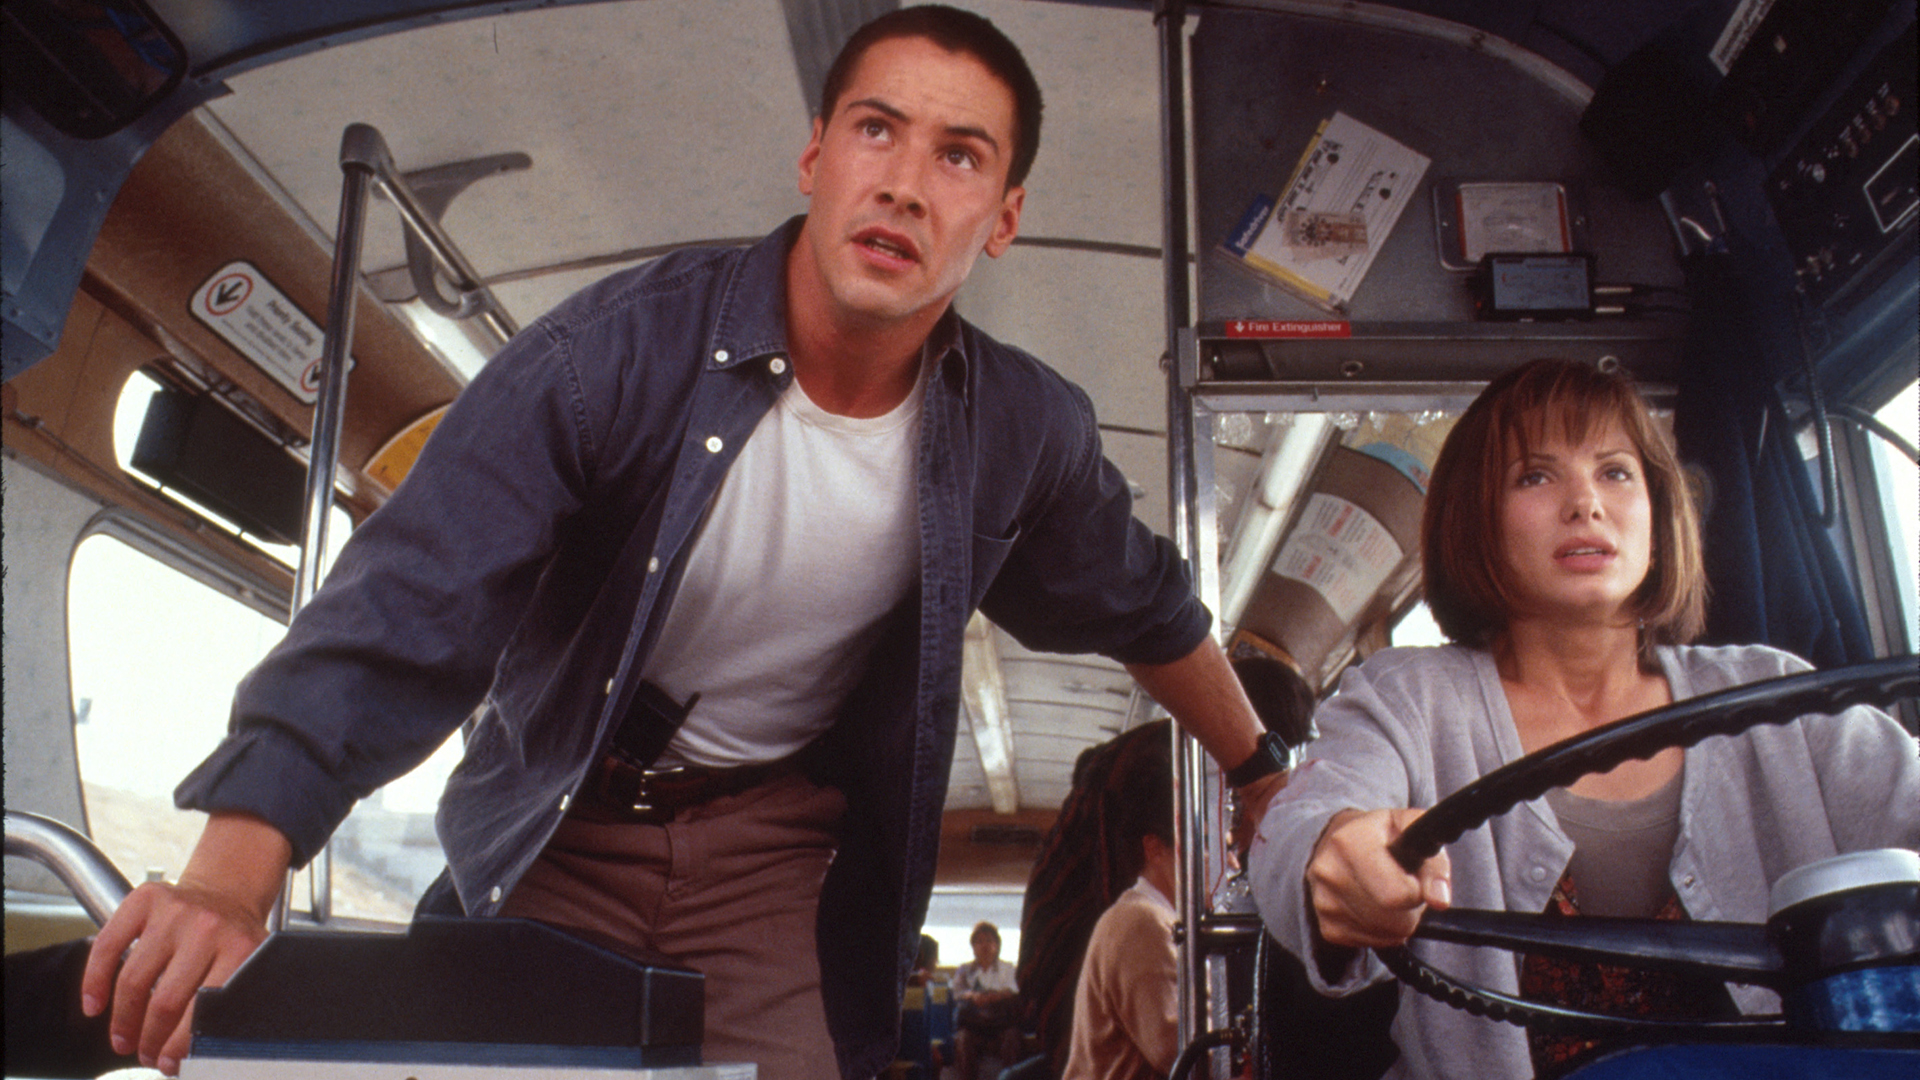 Speed  Speed   Year: 1994 - usa  Keanu Reeves, Sandra Bullock   Director: Jan de Bont
Archives du 7eme Art / Photo12 via AFP (The Grosby Group)